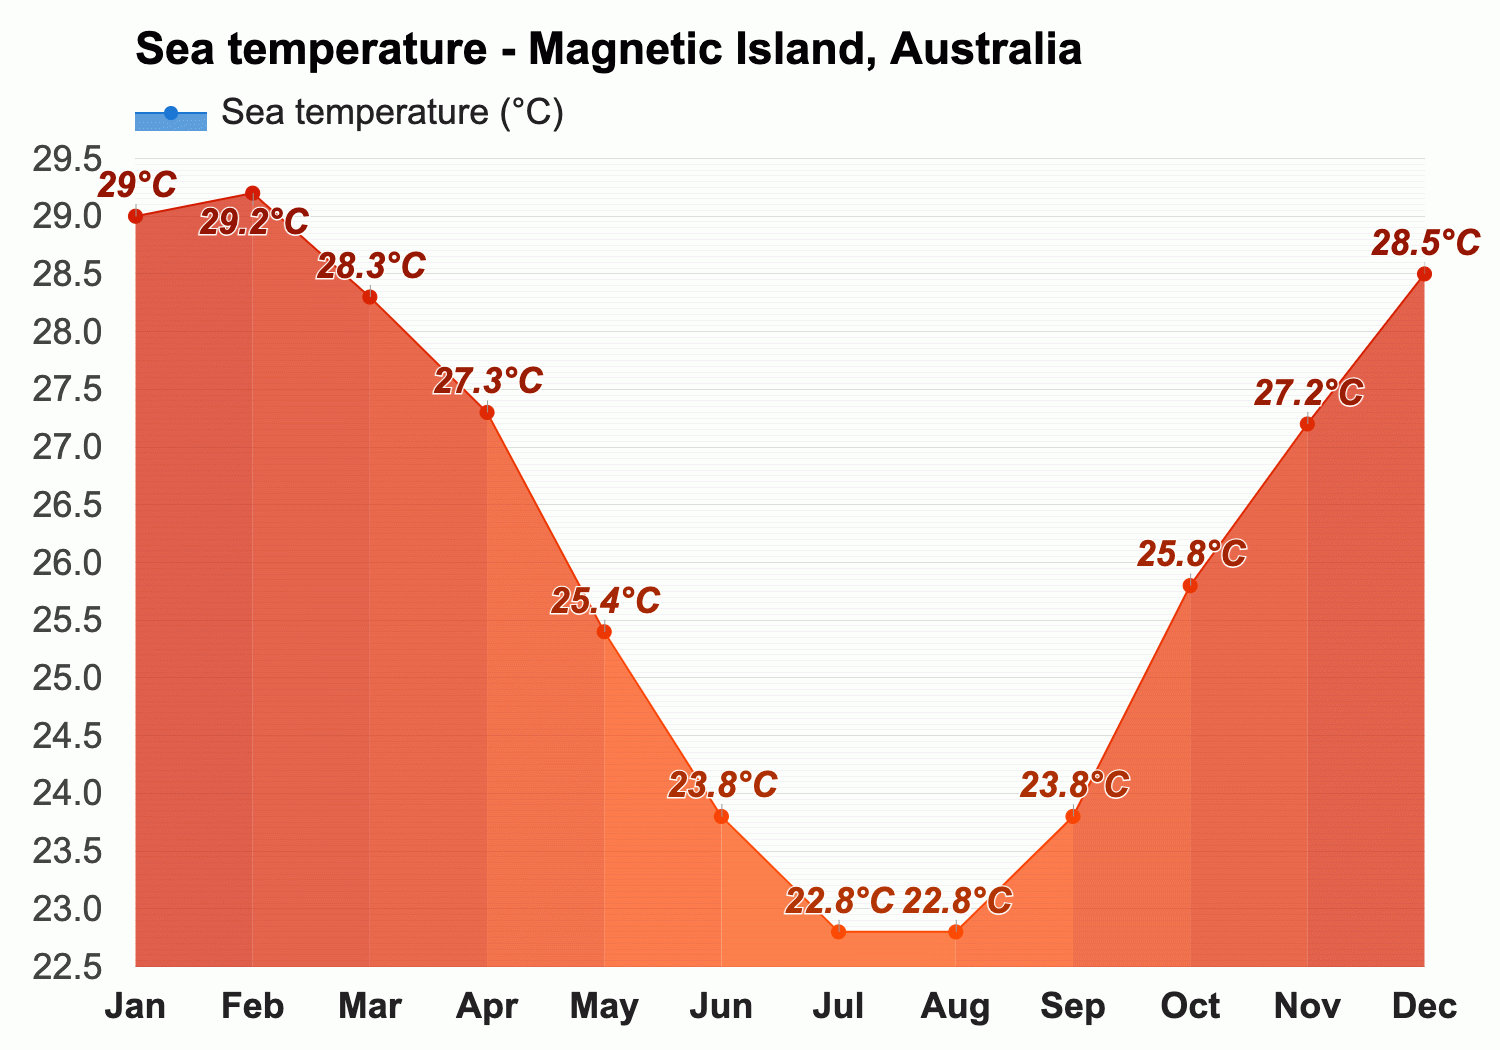 March Weather forecast - Autumn forecast - Magnetic Island, Australia